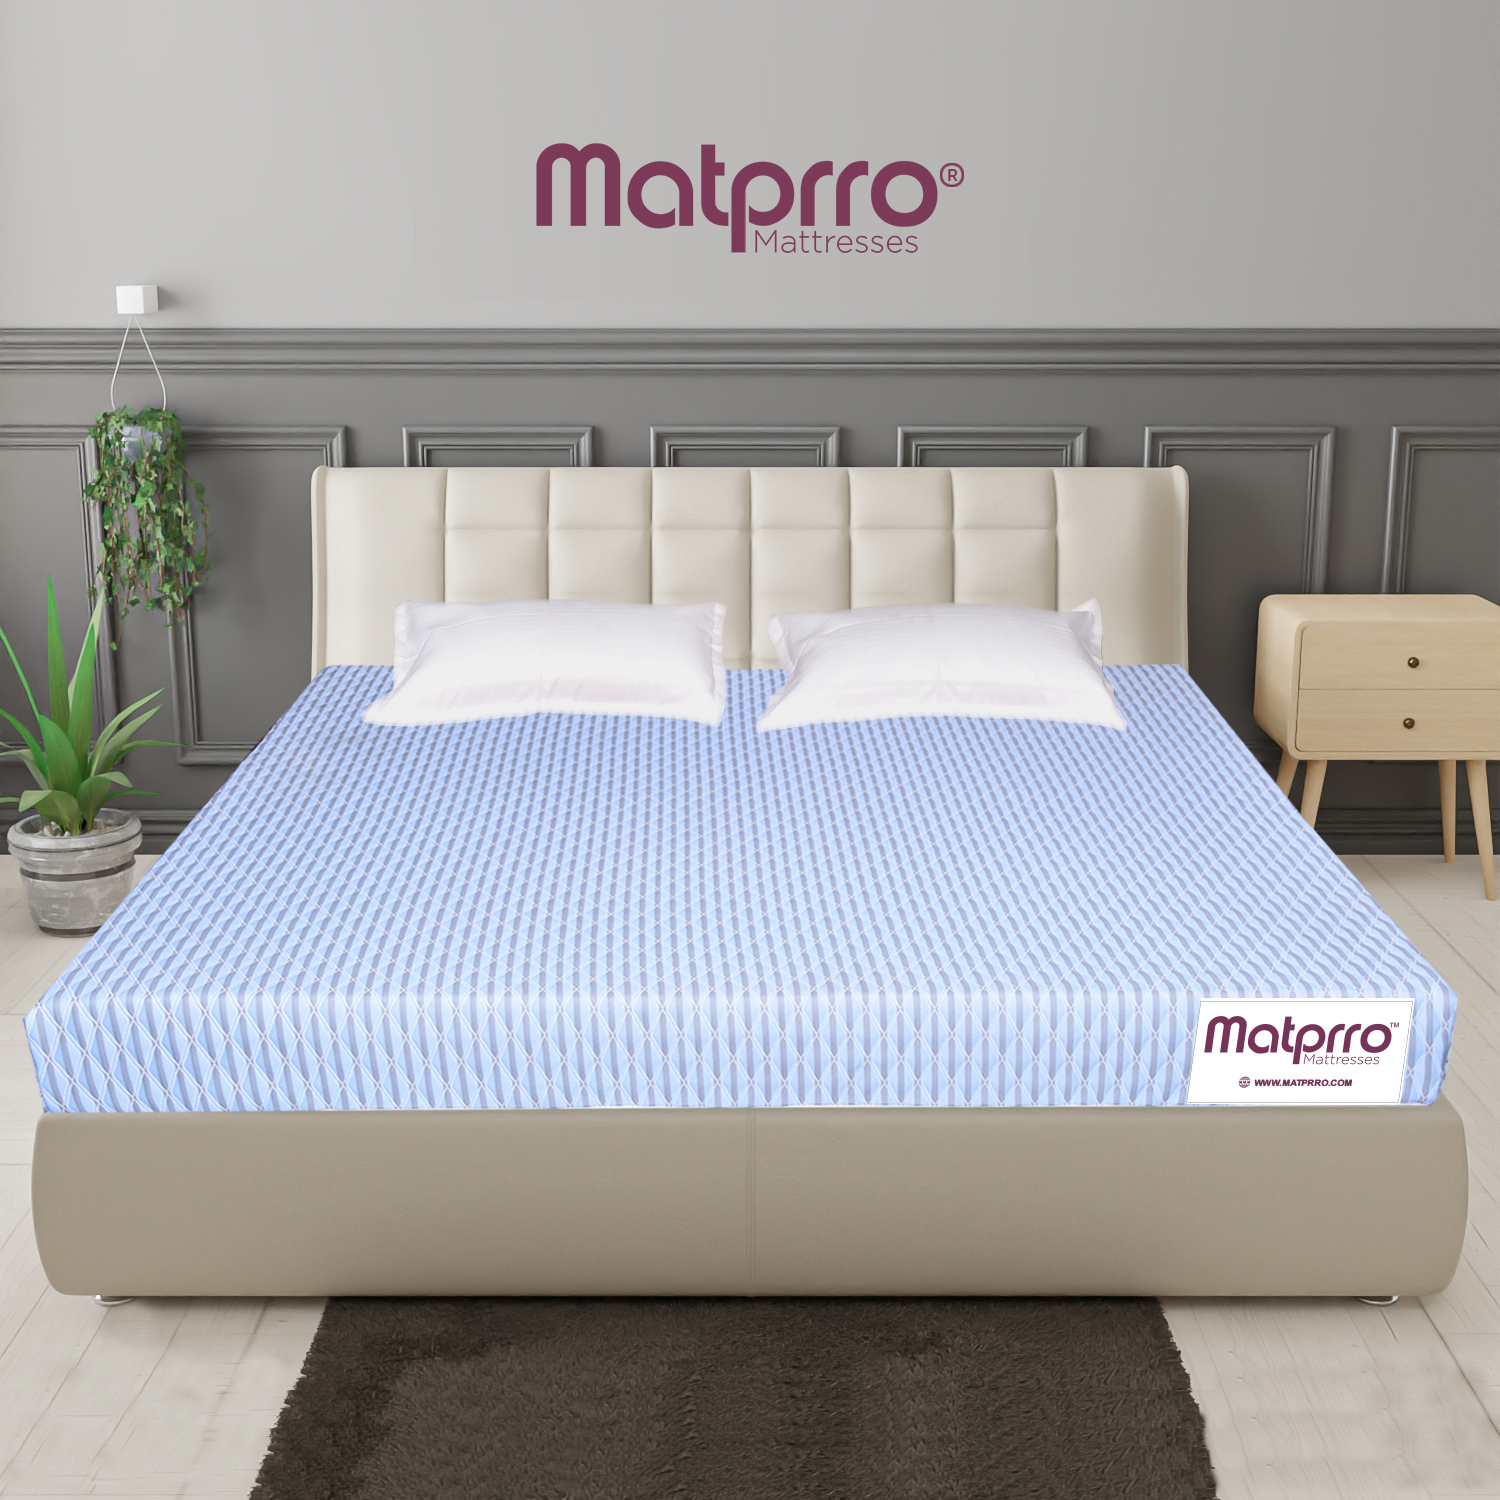 Matprro: Elevate Your Sleep with Premium Mattresses for Ultimate